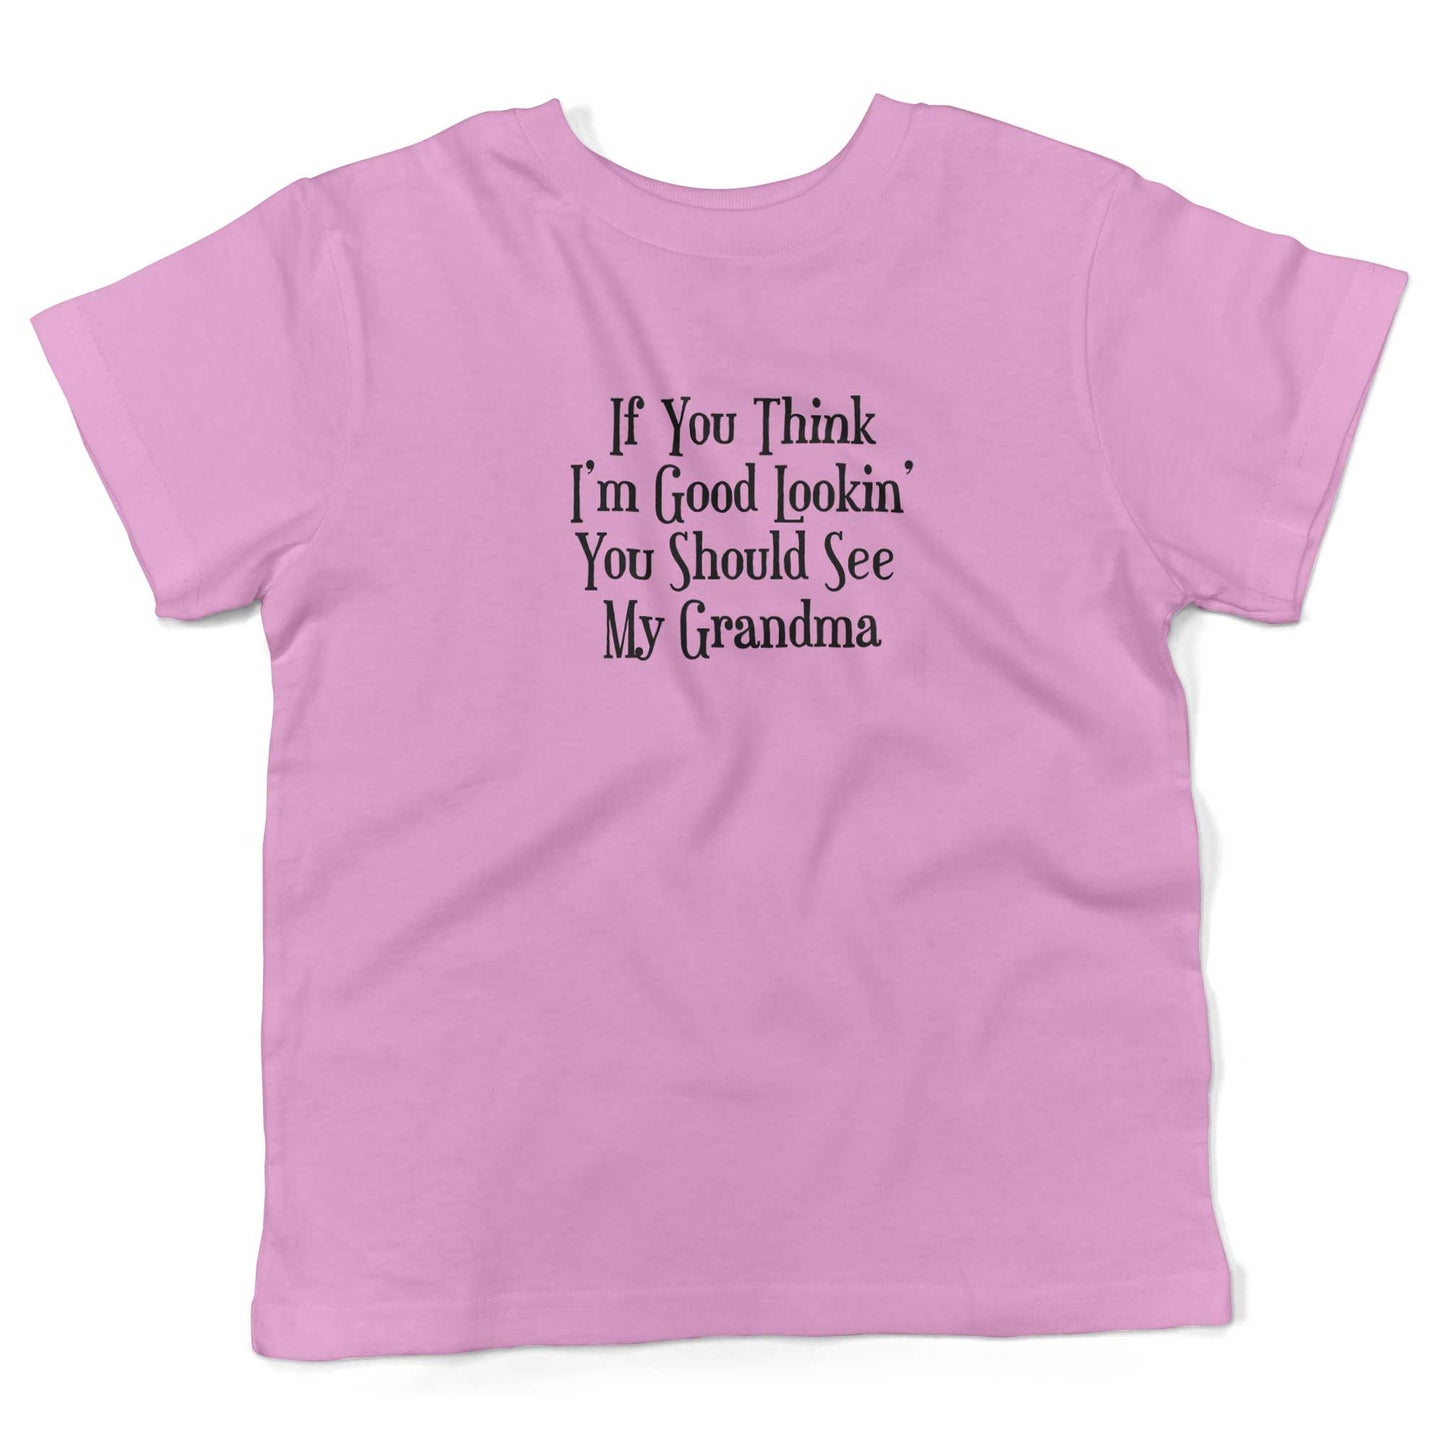 If You Think I'm Good Lookin', You Should See My Grandma Toddler Shirt-Organic Pink-2T